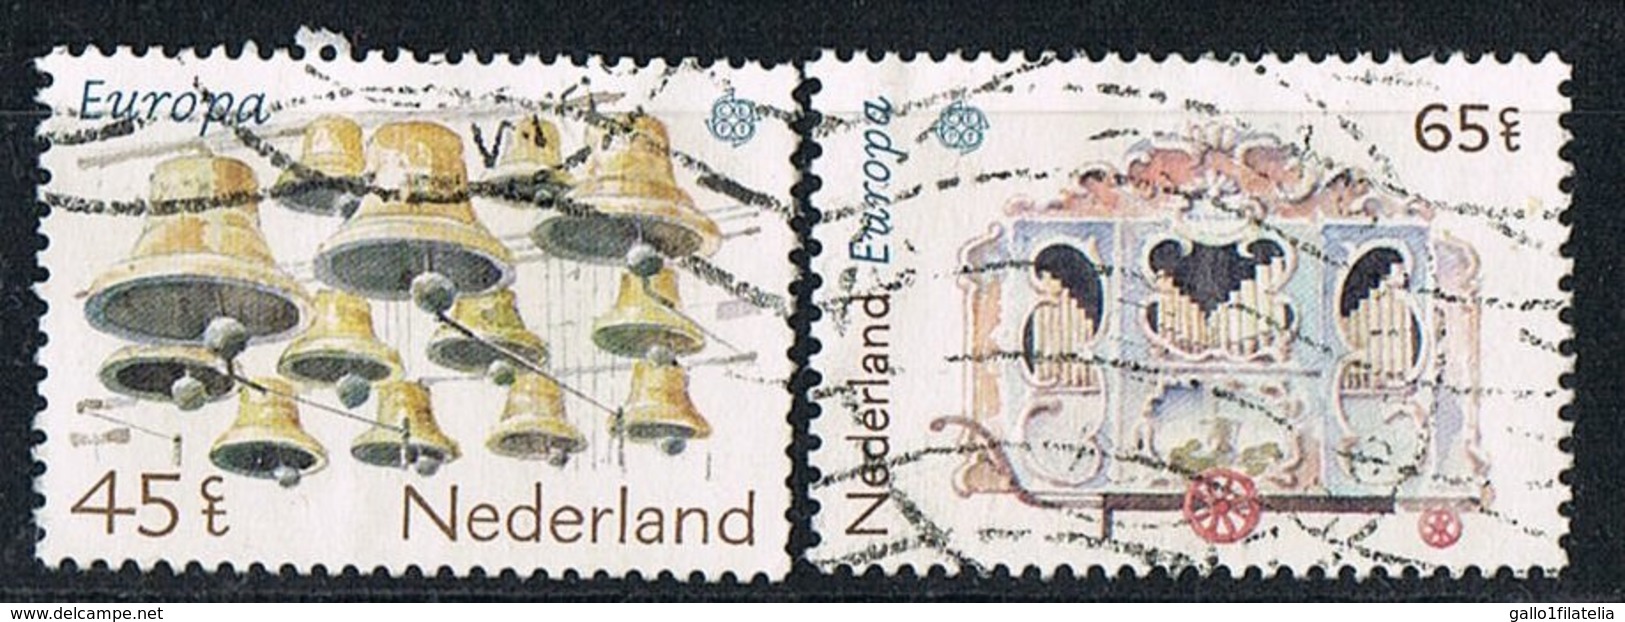 1981 - OLANDA / HOLLAND - EUROPA CEPT - FOLCLORE / FOLKLORE. USATO - 1981